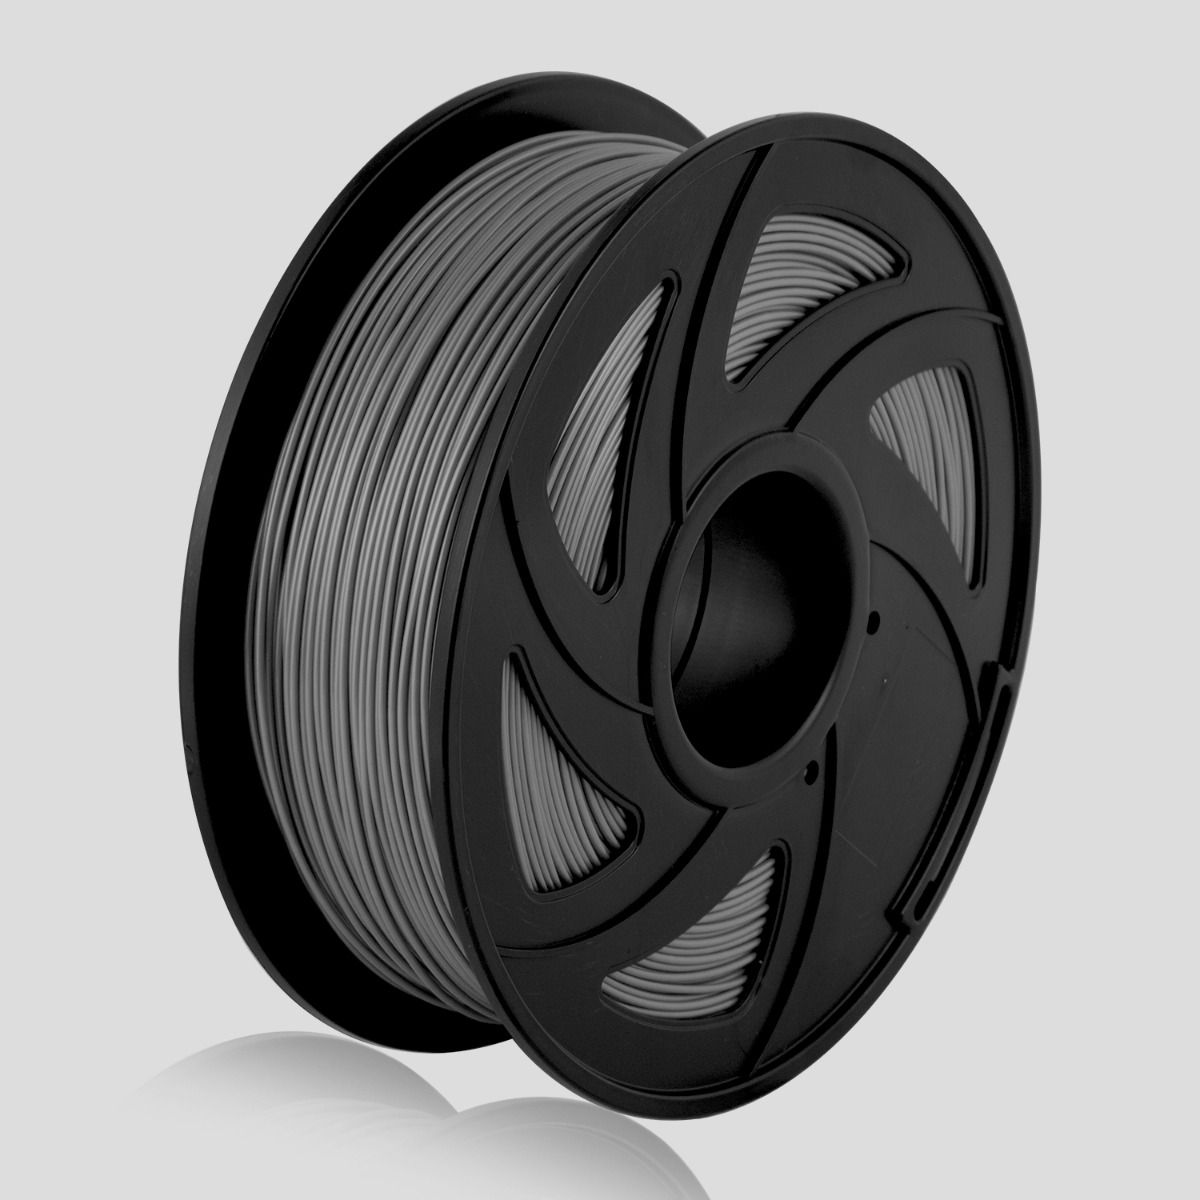 IMPERIAL BRAND PLA+ DARK GREY 3D Printer Filament 1.75mm 1KG Spool Filament for 3D Printing, Dimensional Accuracy +/- 0.02